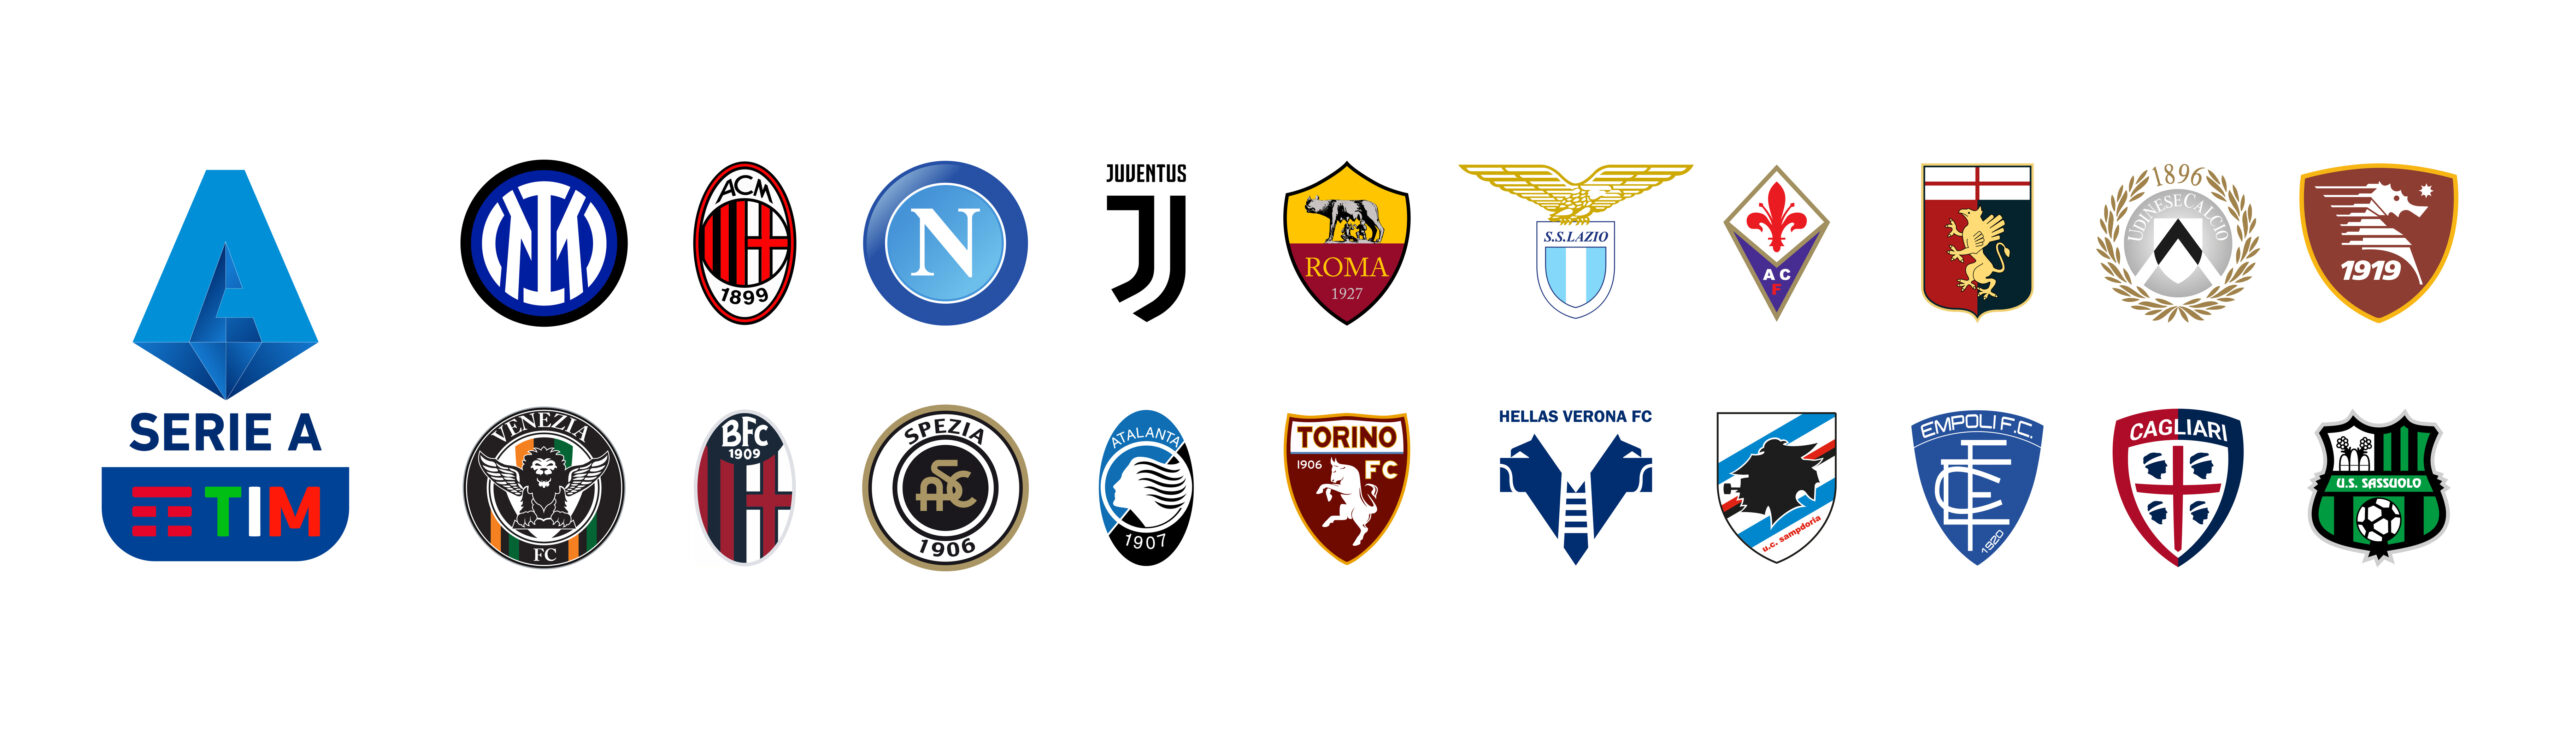 Serie A clubs logos